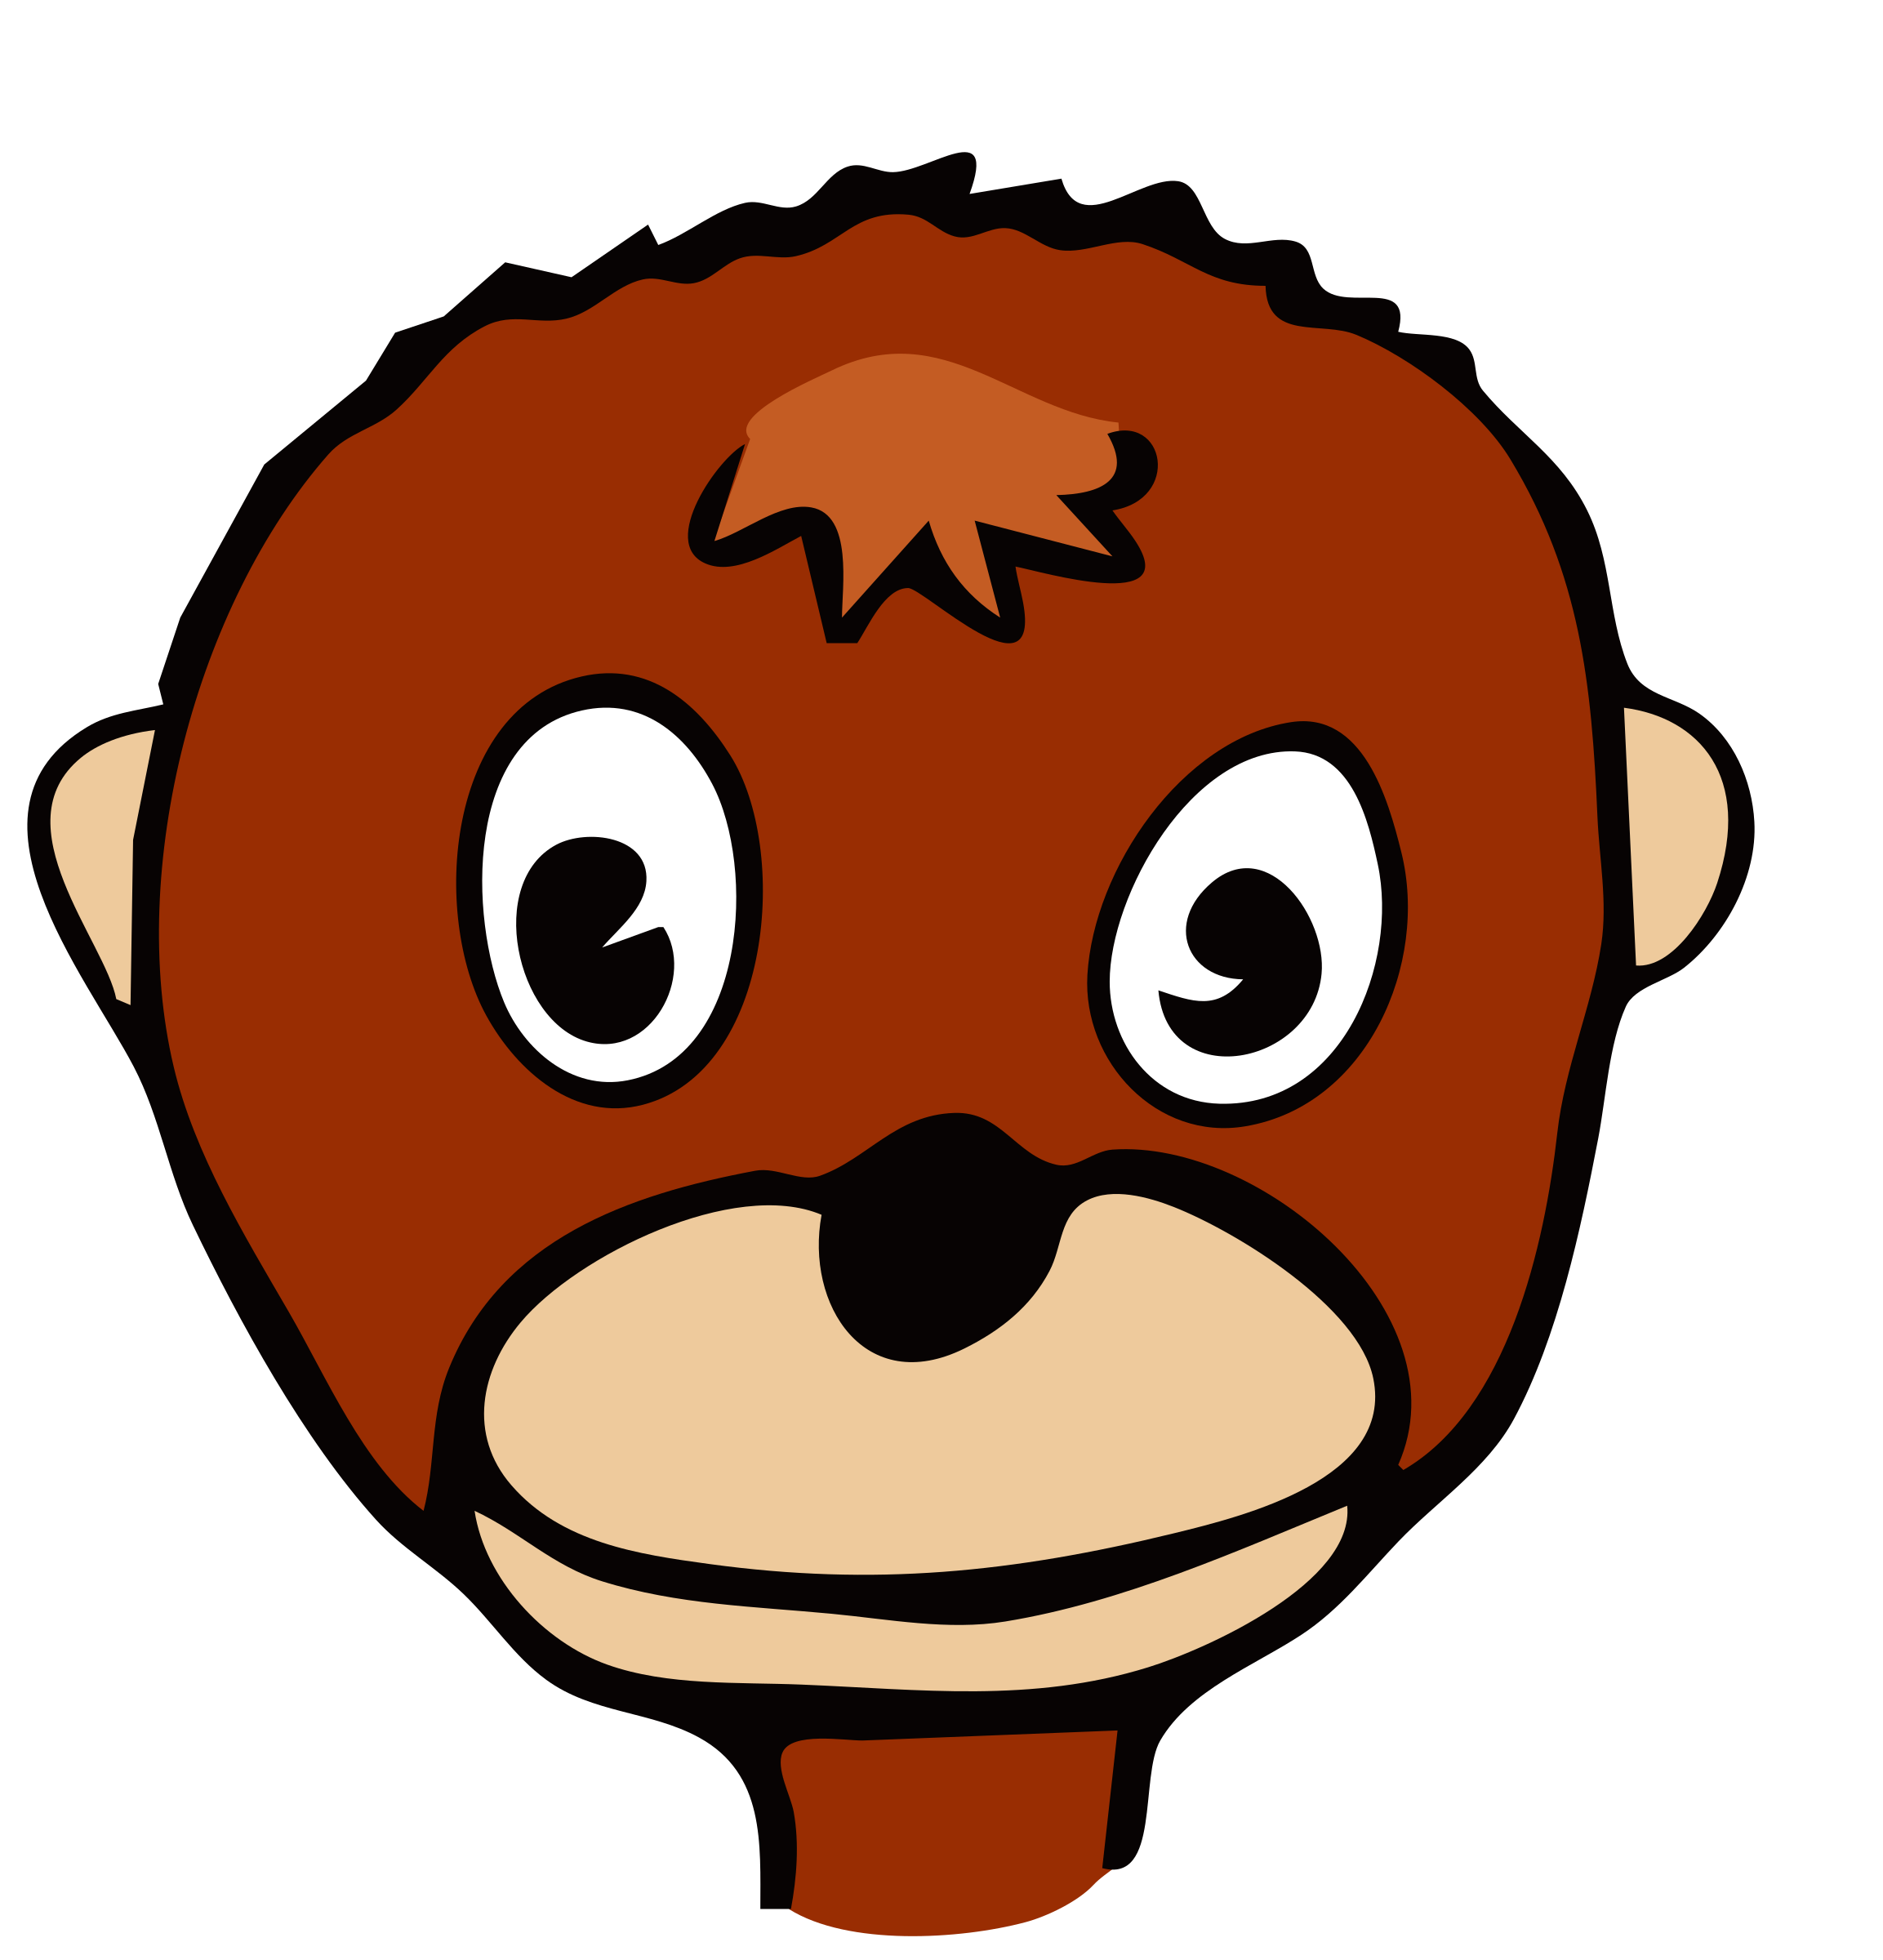 drawn monkey SVG Clip arts